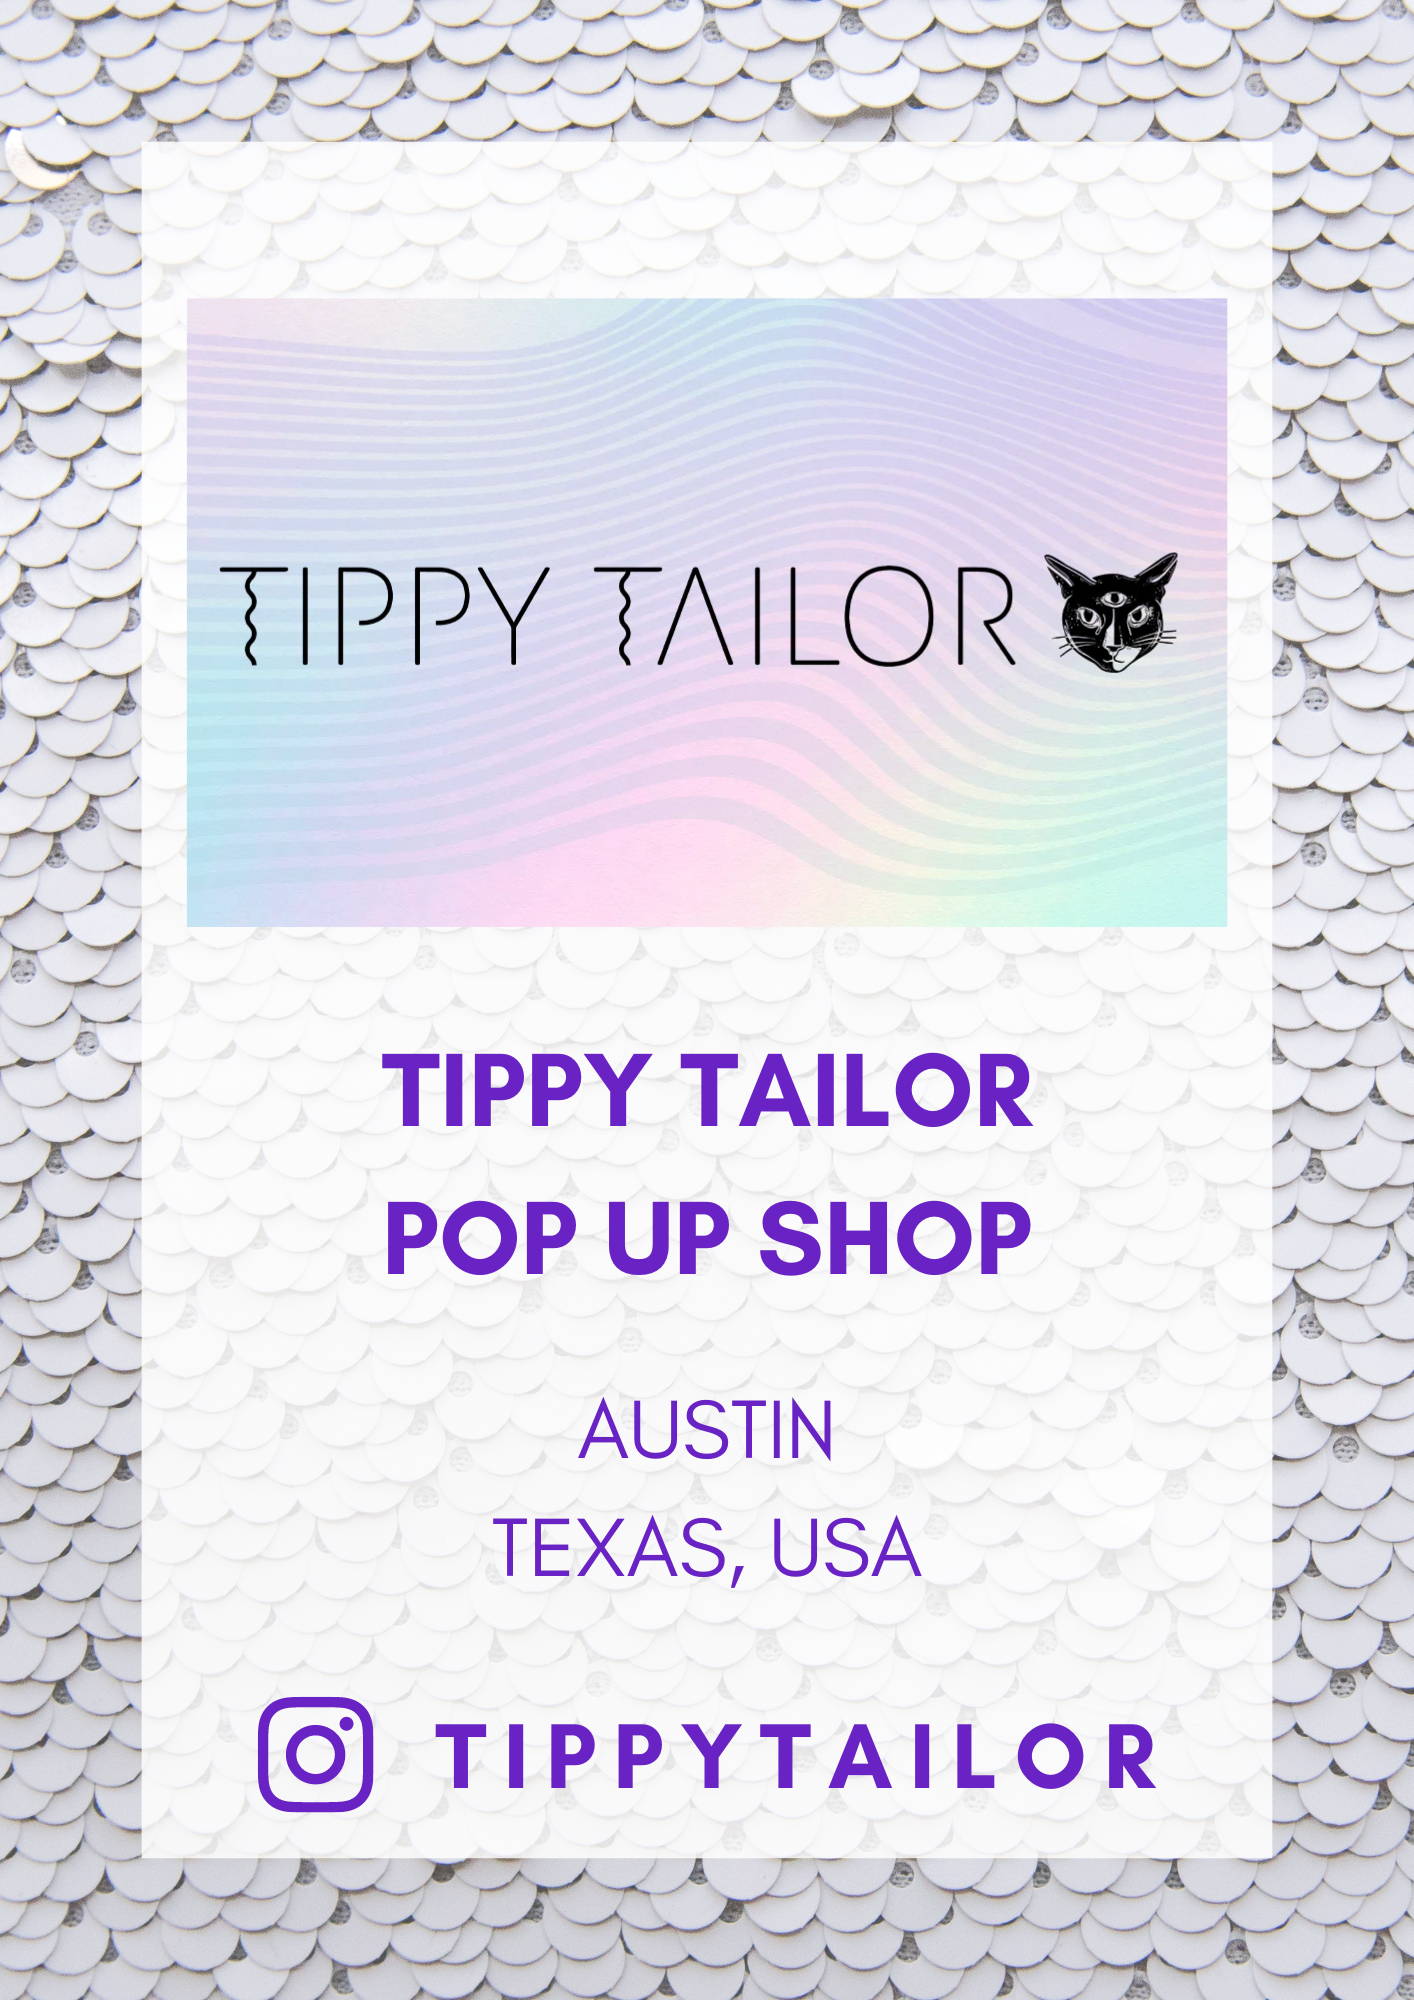 TIPPY TAILOR POP UP SHOP AUSTIN TEXAS Sea Dragon Studio Holographic Festival Clothing Retail Partner